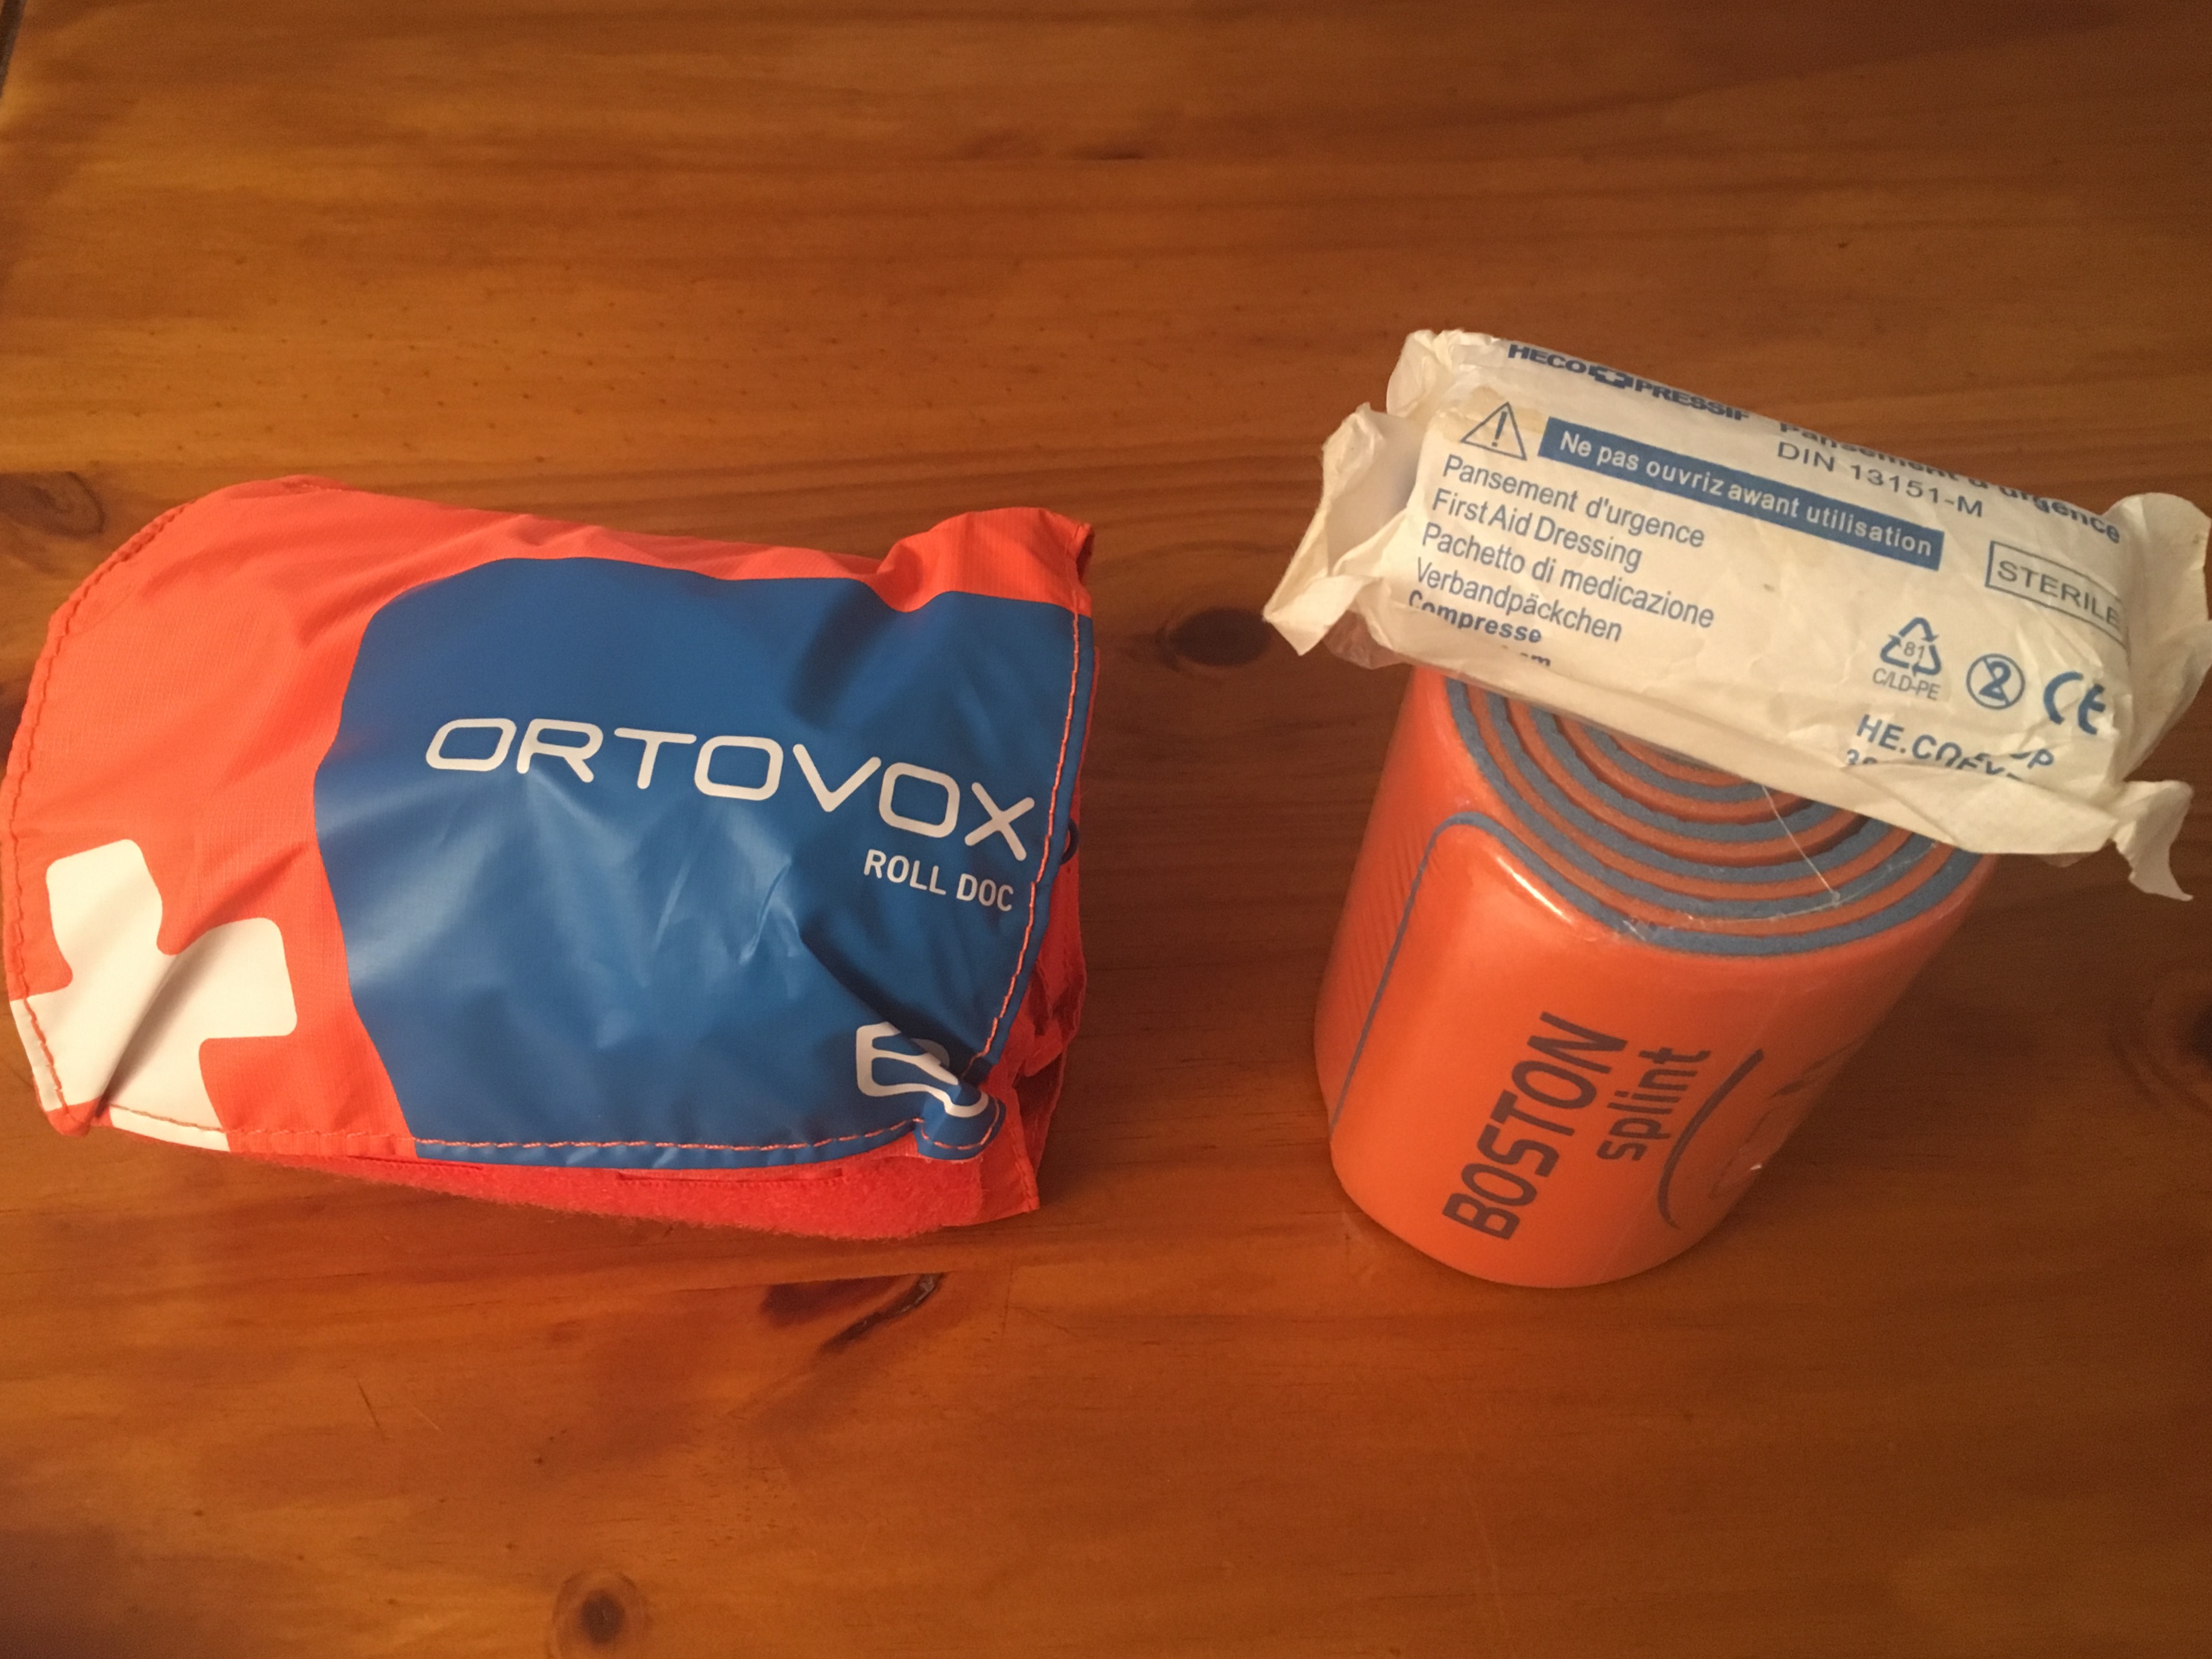 Ortovox First Aid Waterproof Mini trousse de secours